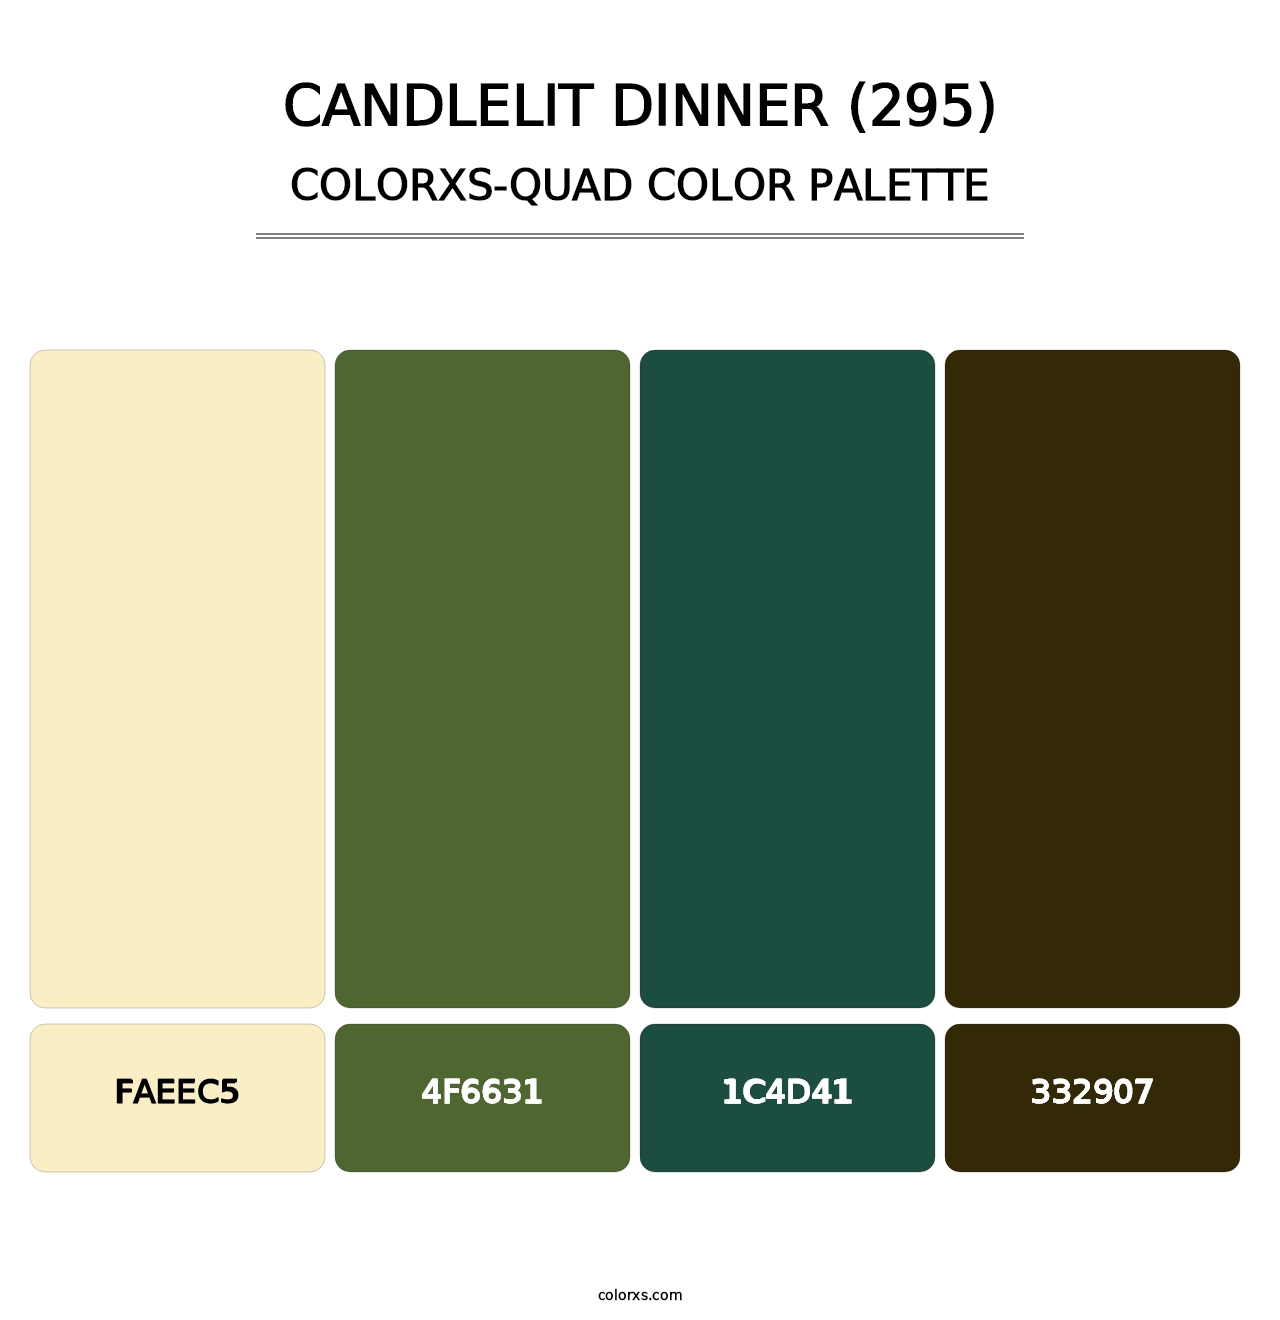 Candlelit Dinner (295) - Colorxs Quad Palette